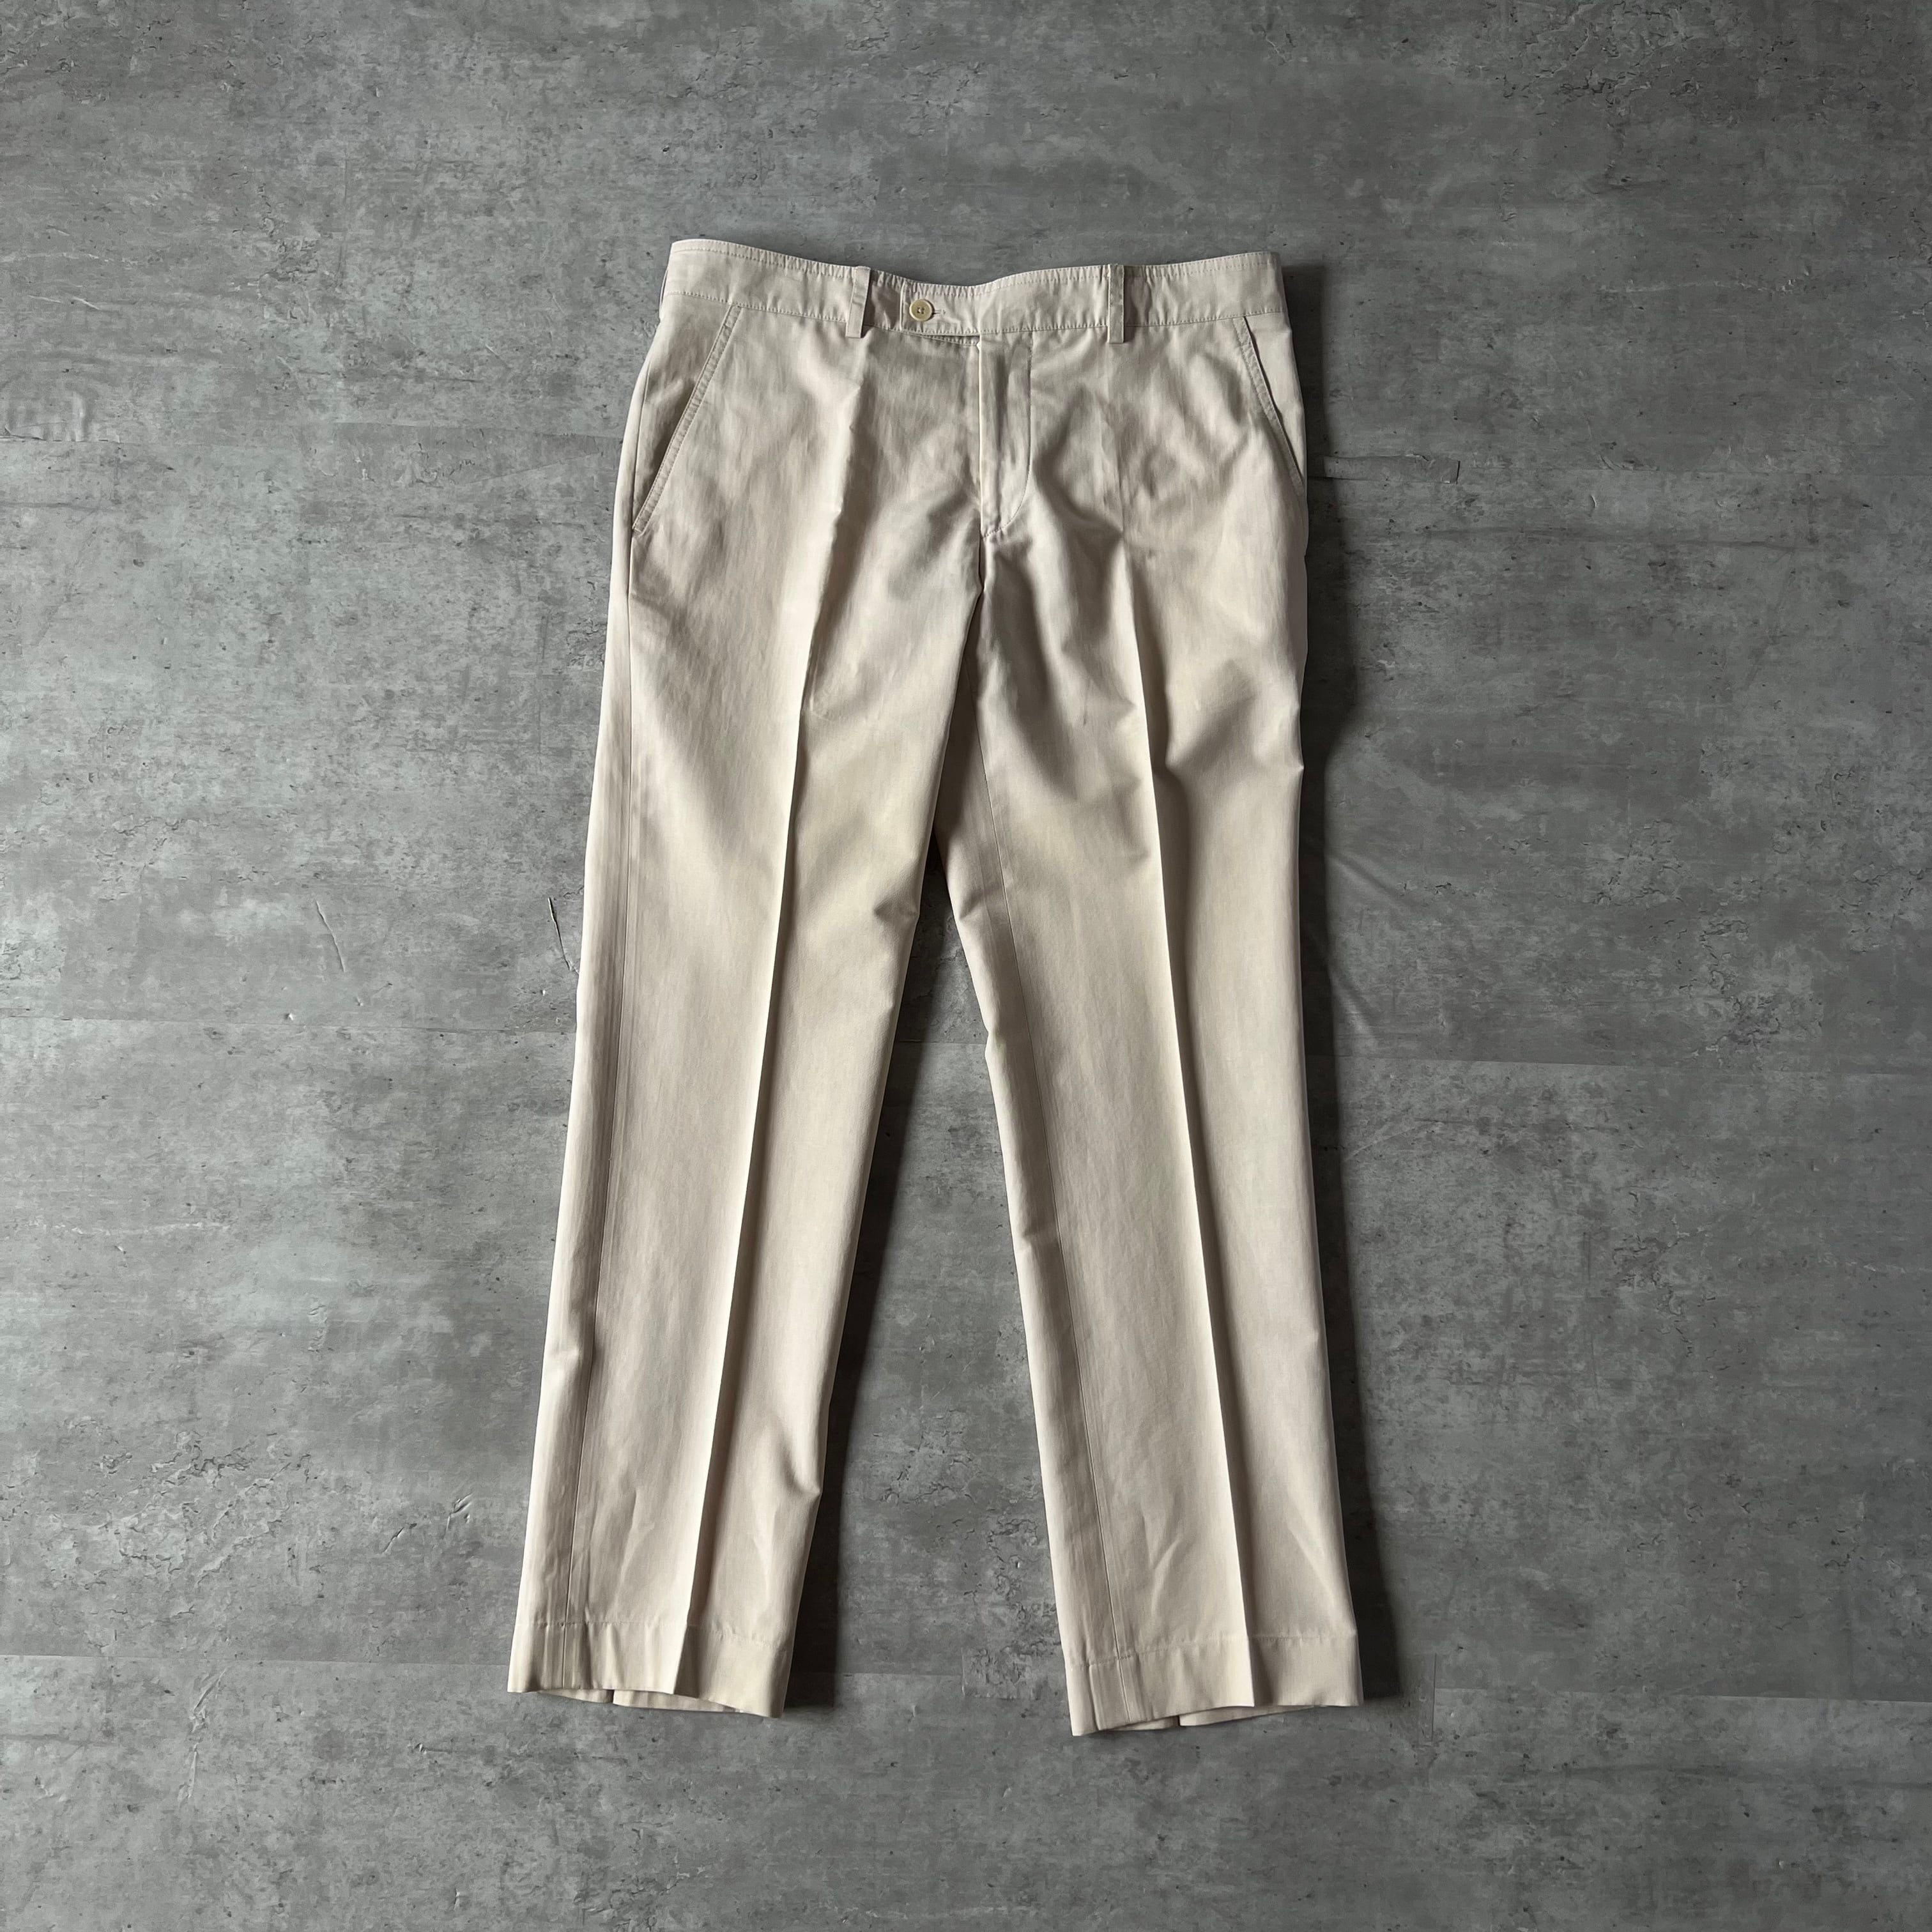 80s “Hermes” W34相当 cotton linen slacks pants made in italy